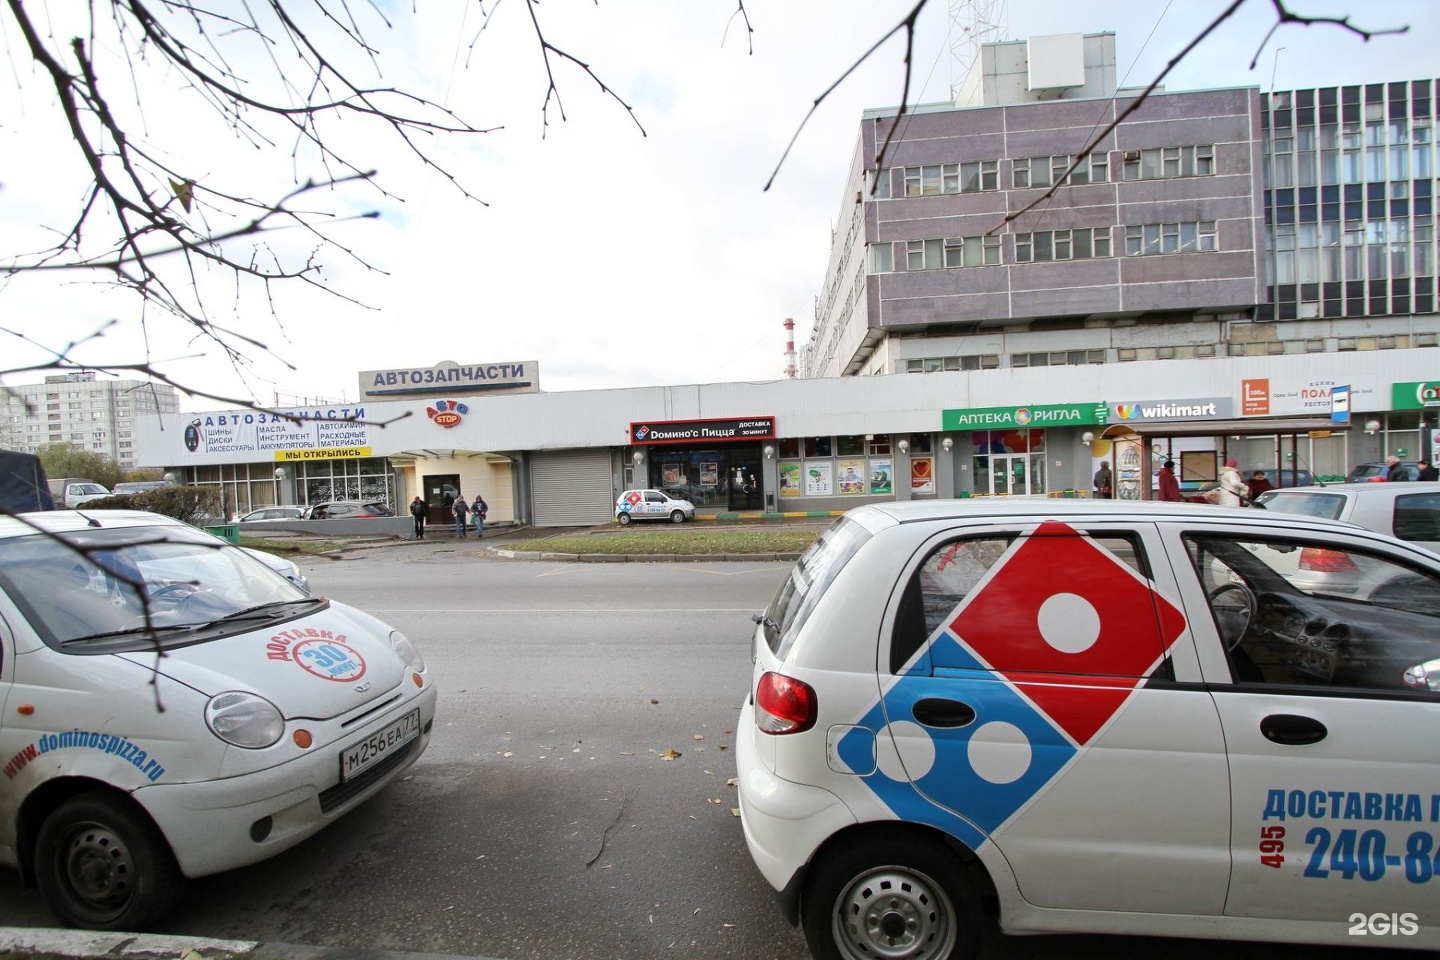 Доминос пицца телефон доставки. Domino's pizza Москва машины. Сеть пиццерий в Москве. Доминос пицца на Бирюлевской. Доминос пицца на Бирюлевской 38.